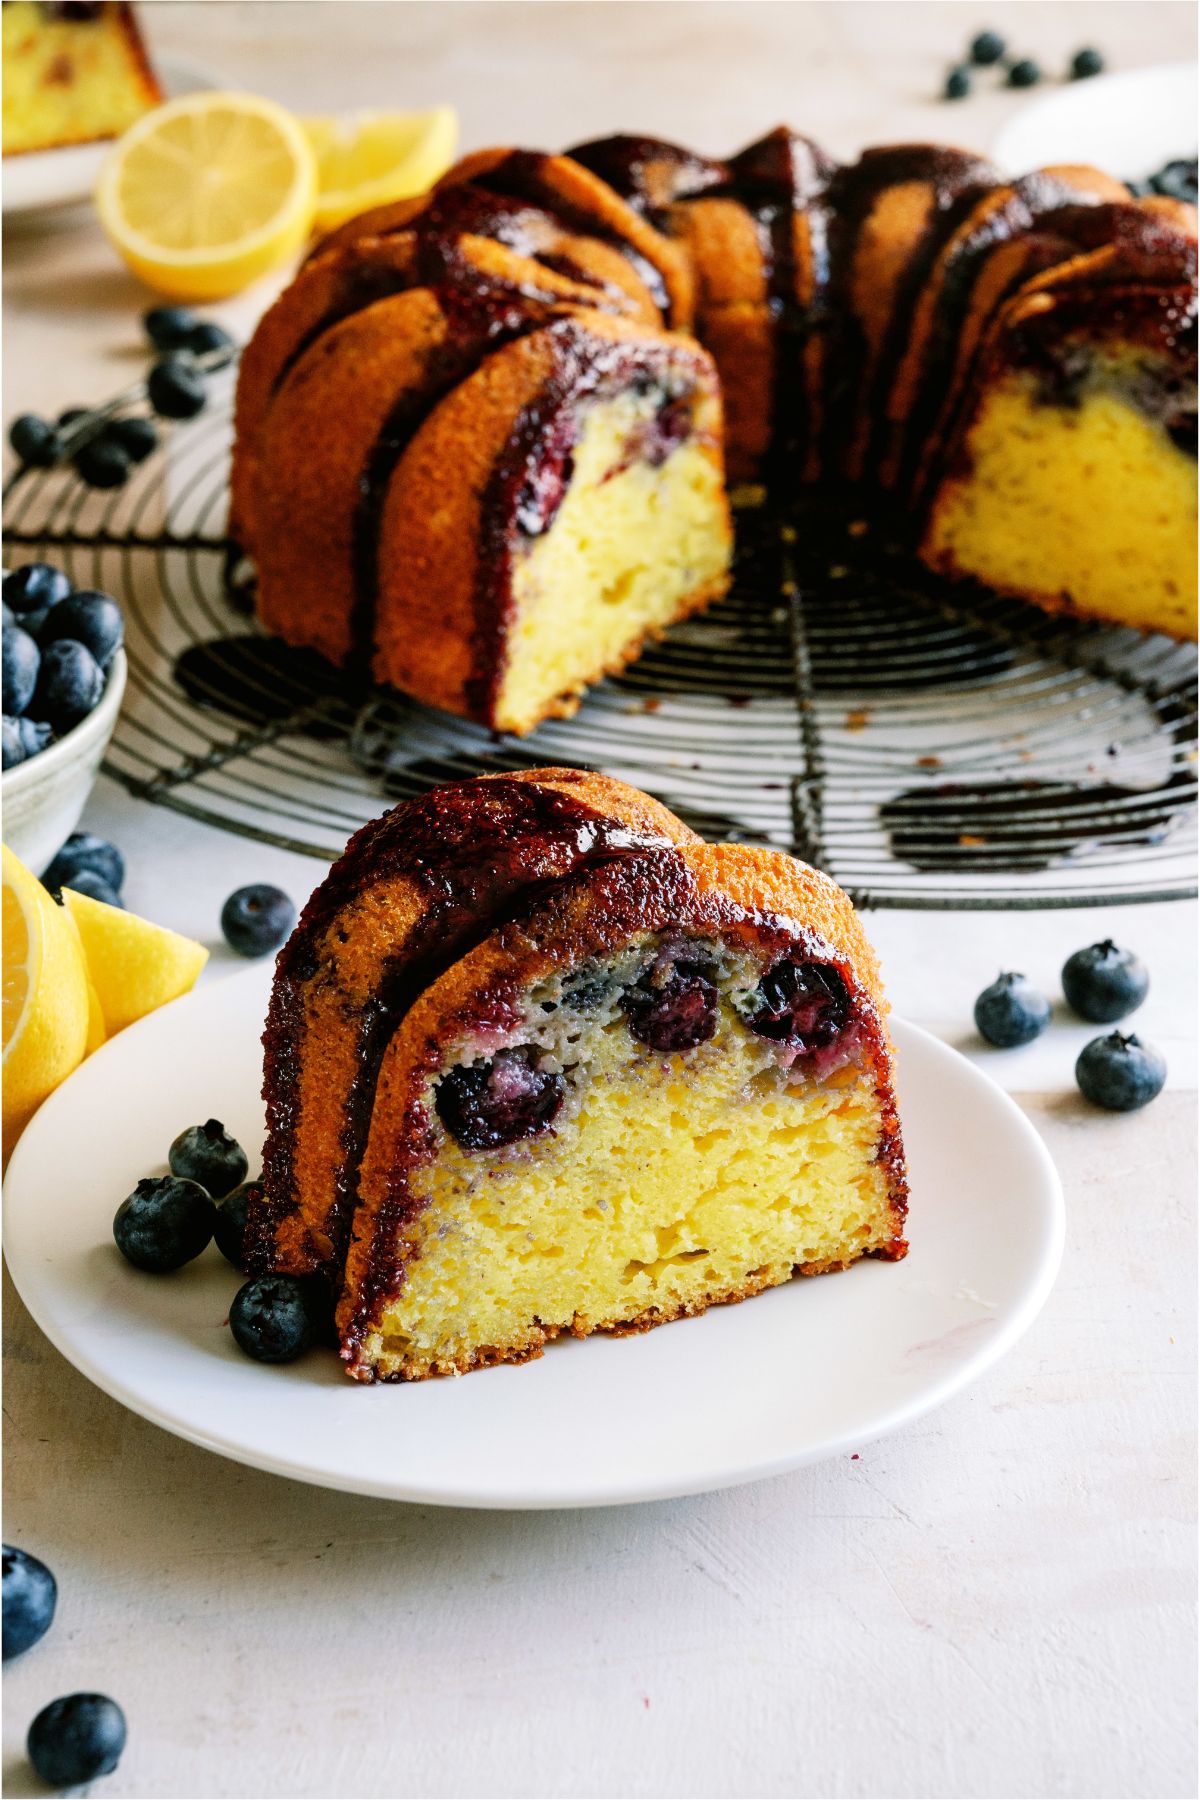 Lemon Blueberry Bundt Cake with one slice on a plate